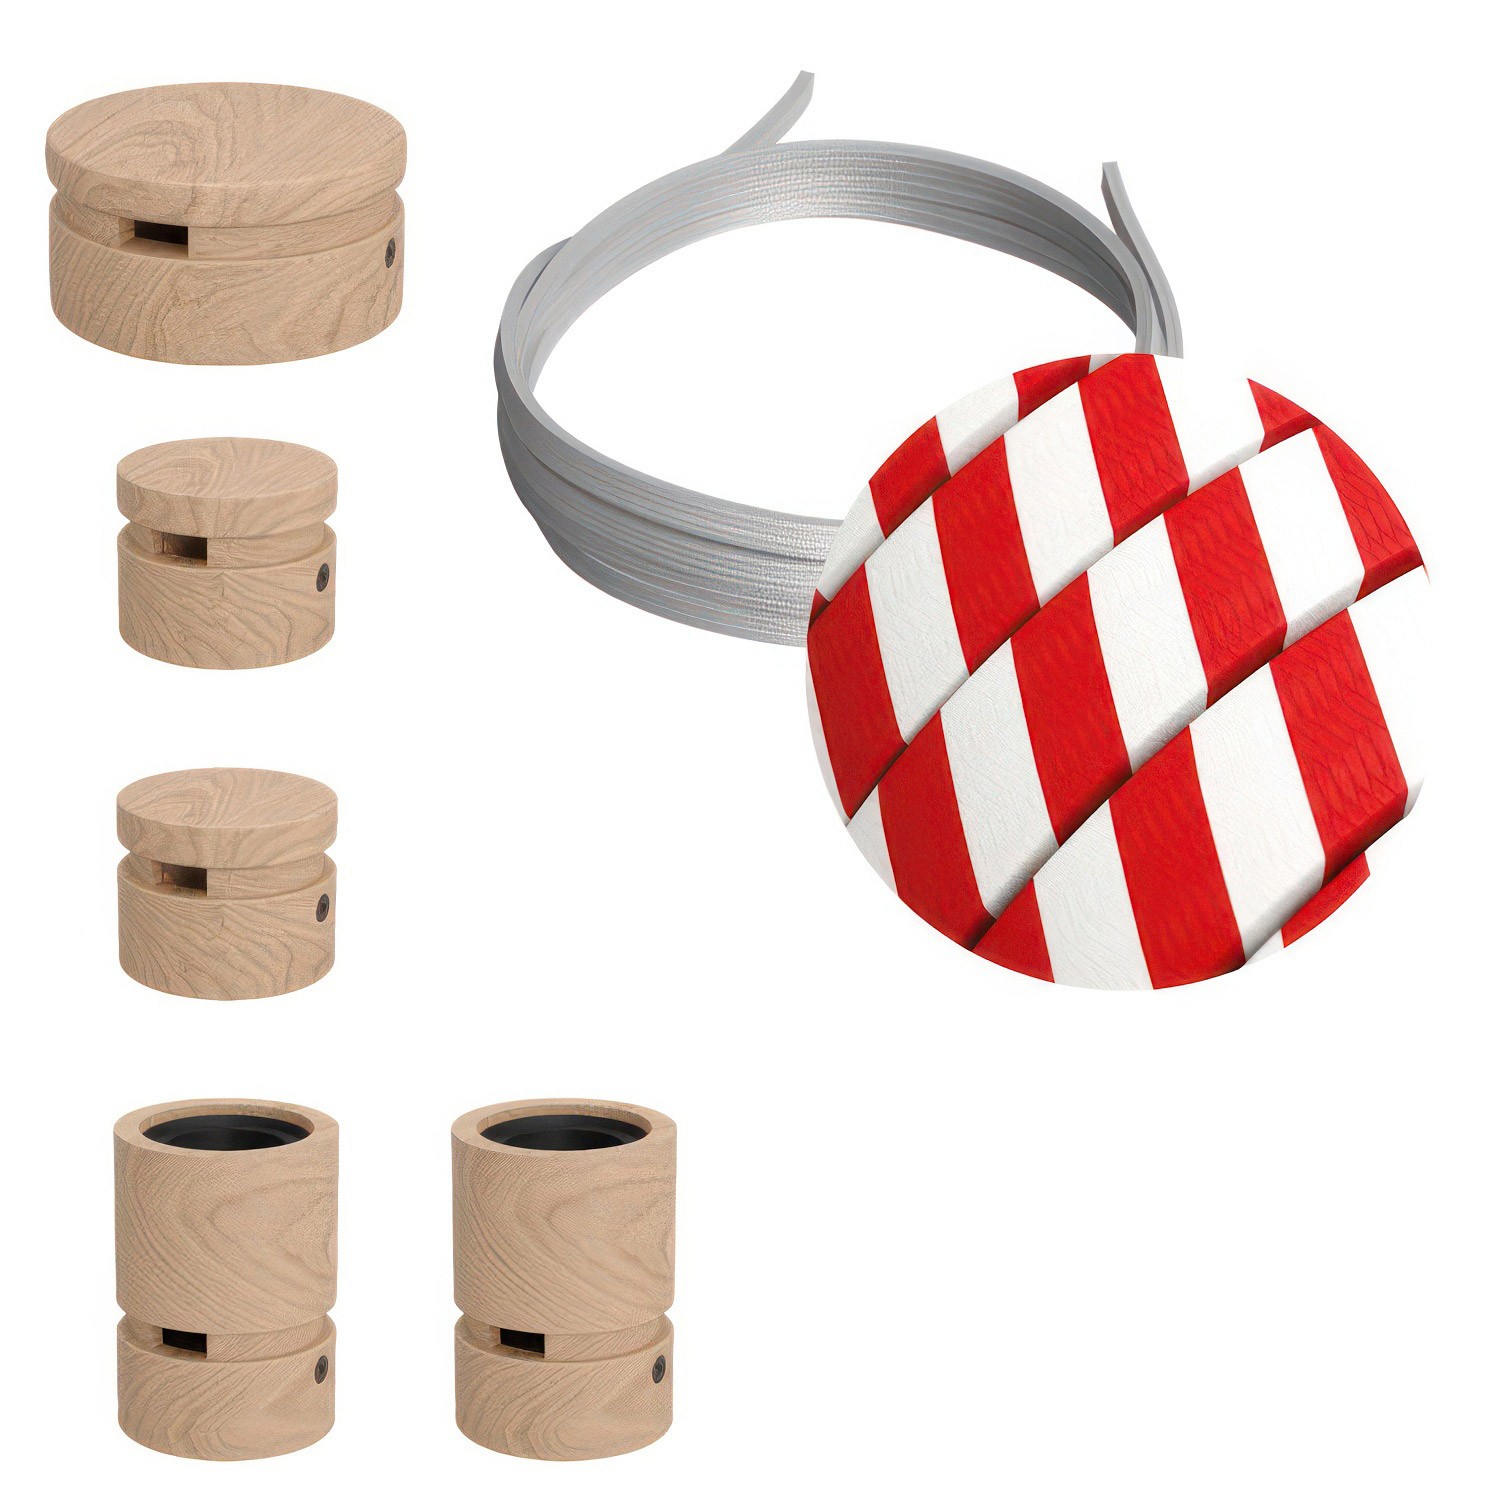 Kit Wiggle Filé System - con 3m cable textil guirnalda y 5 accesorios de madera